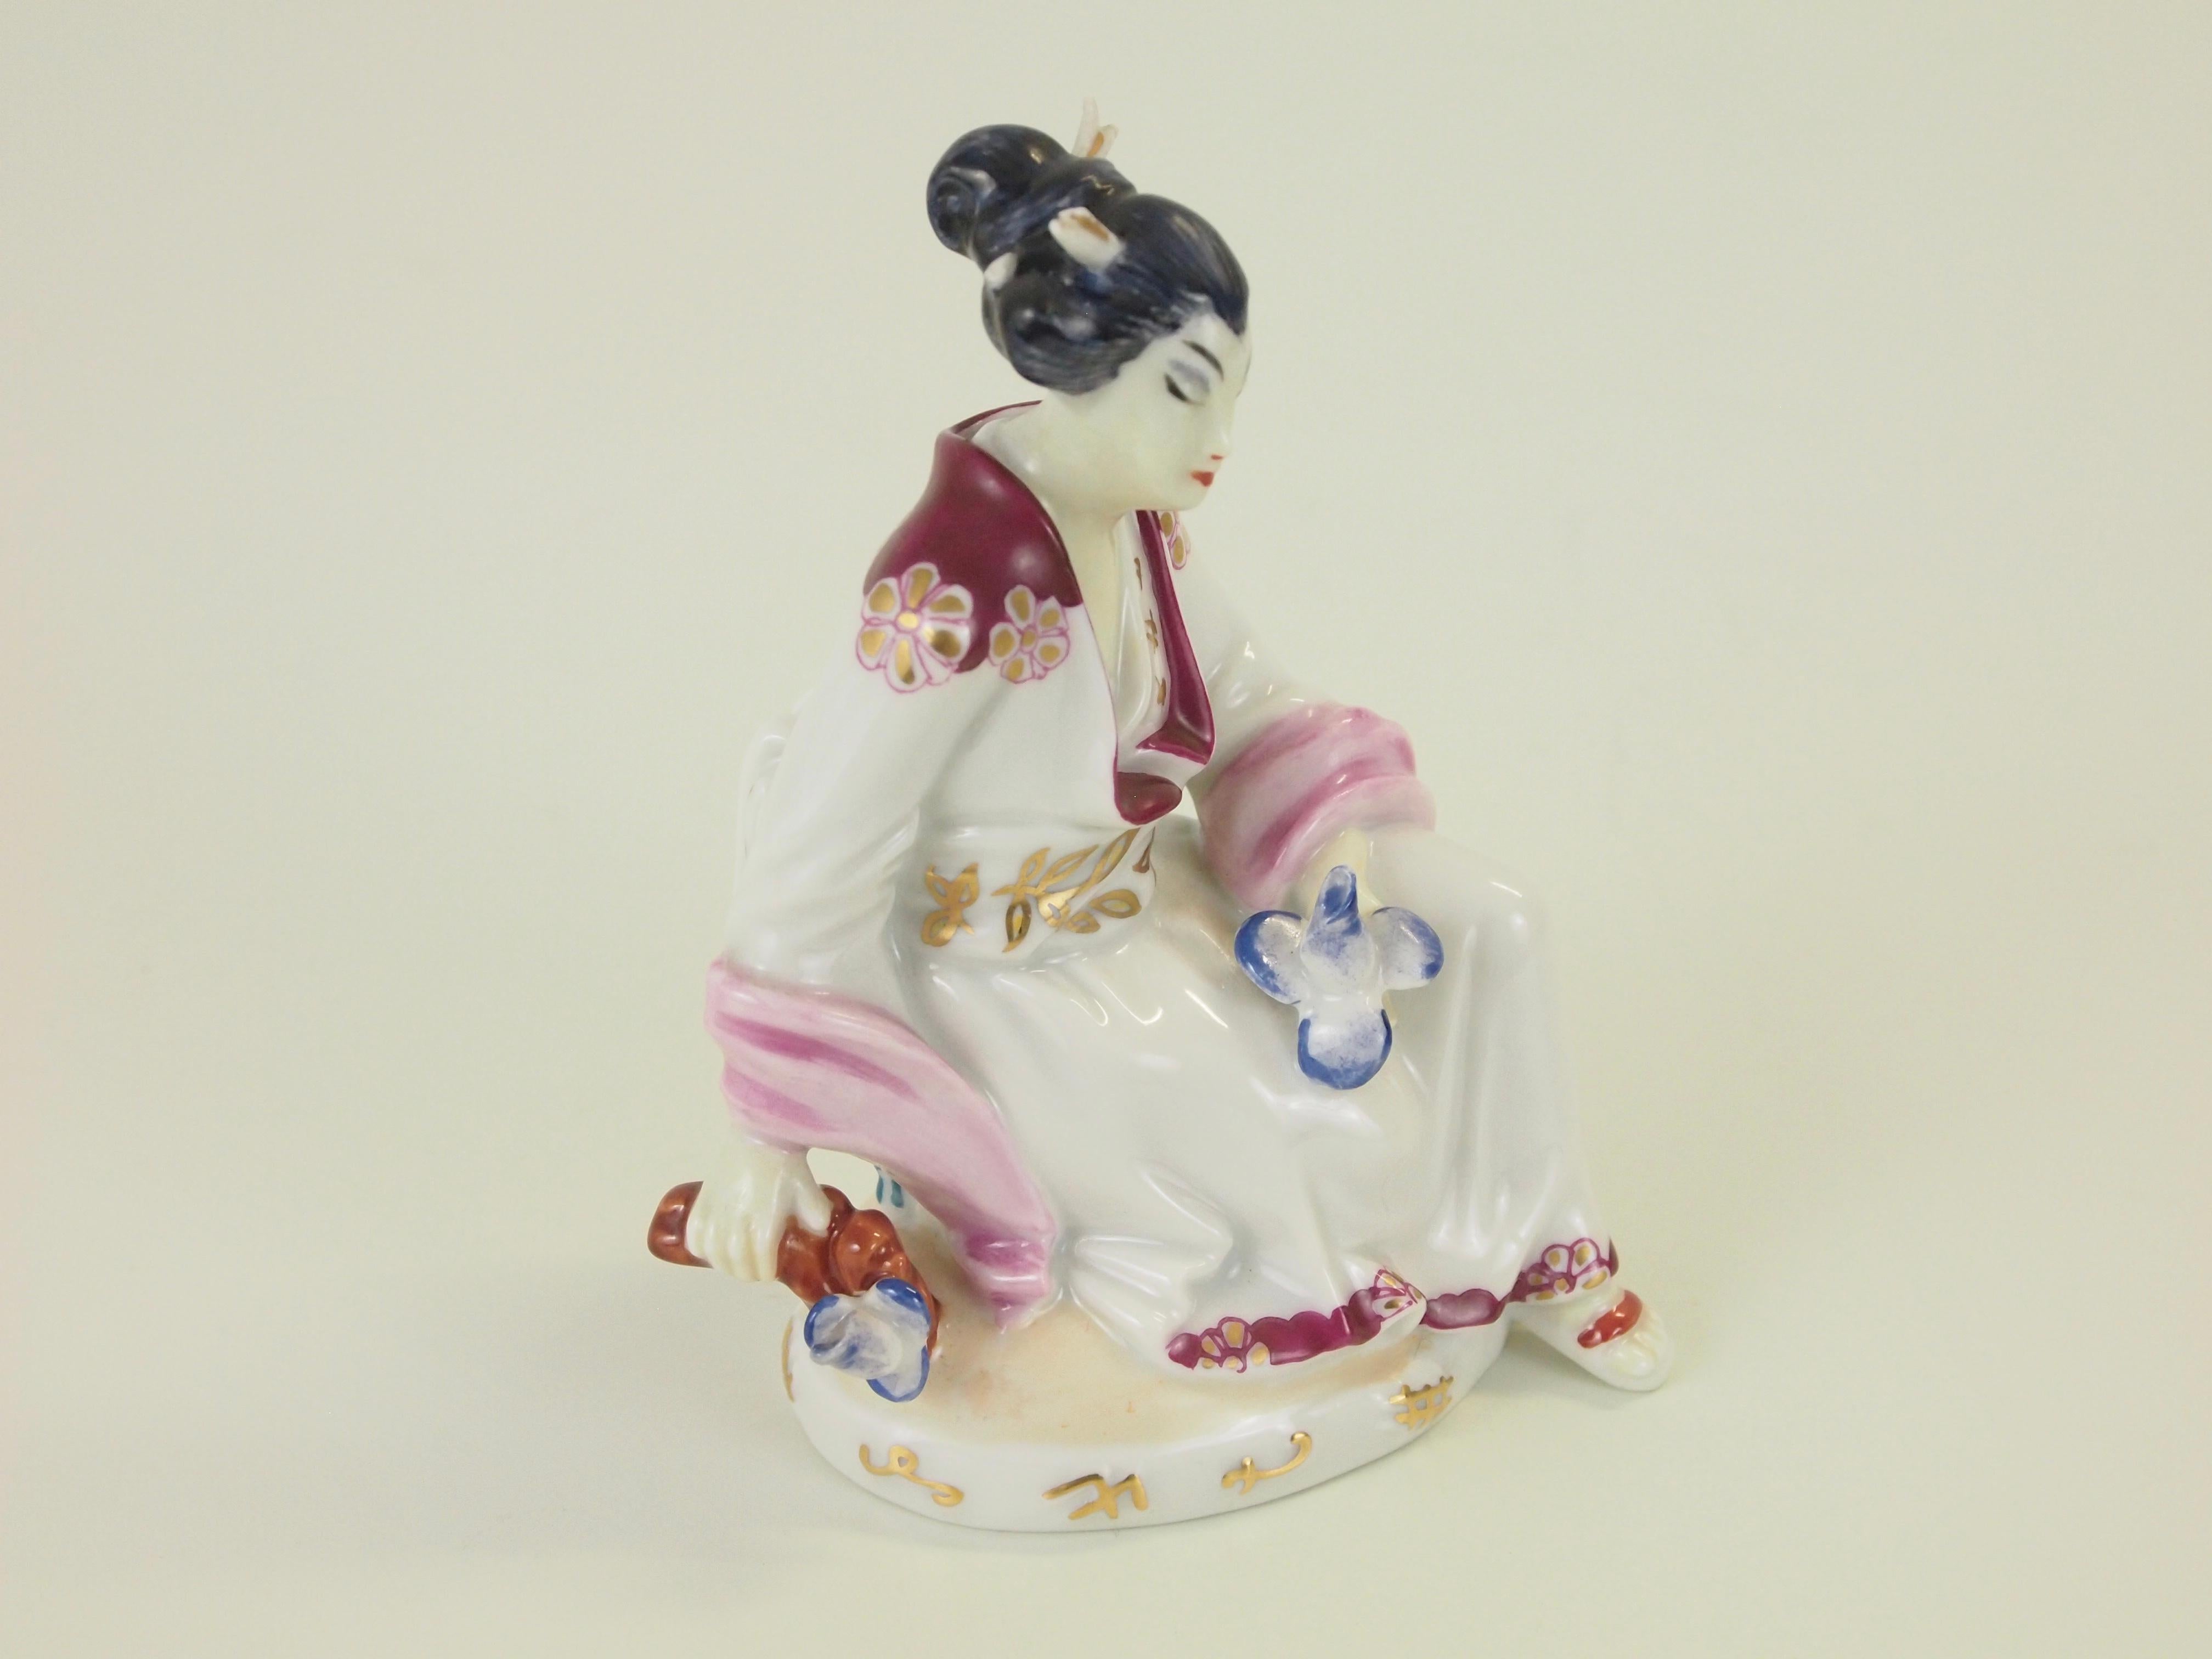 20th Century Augarten Wien Porcelain Figurine Depicting a Chinese Woman by Mathilde Jaksch For Sale